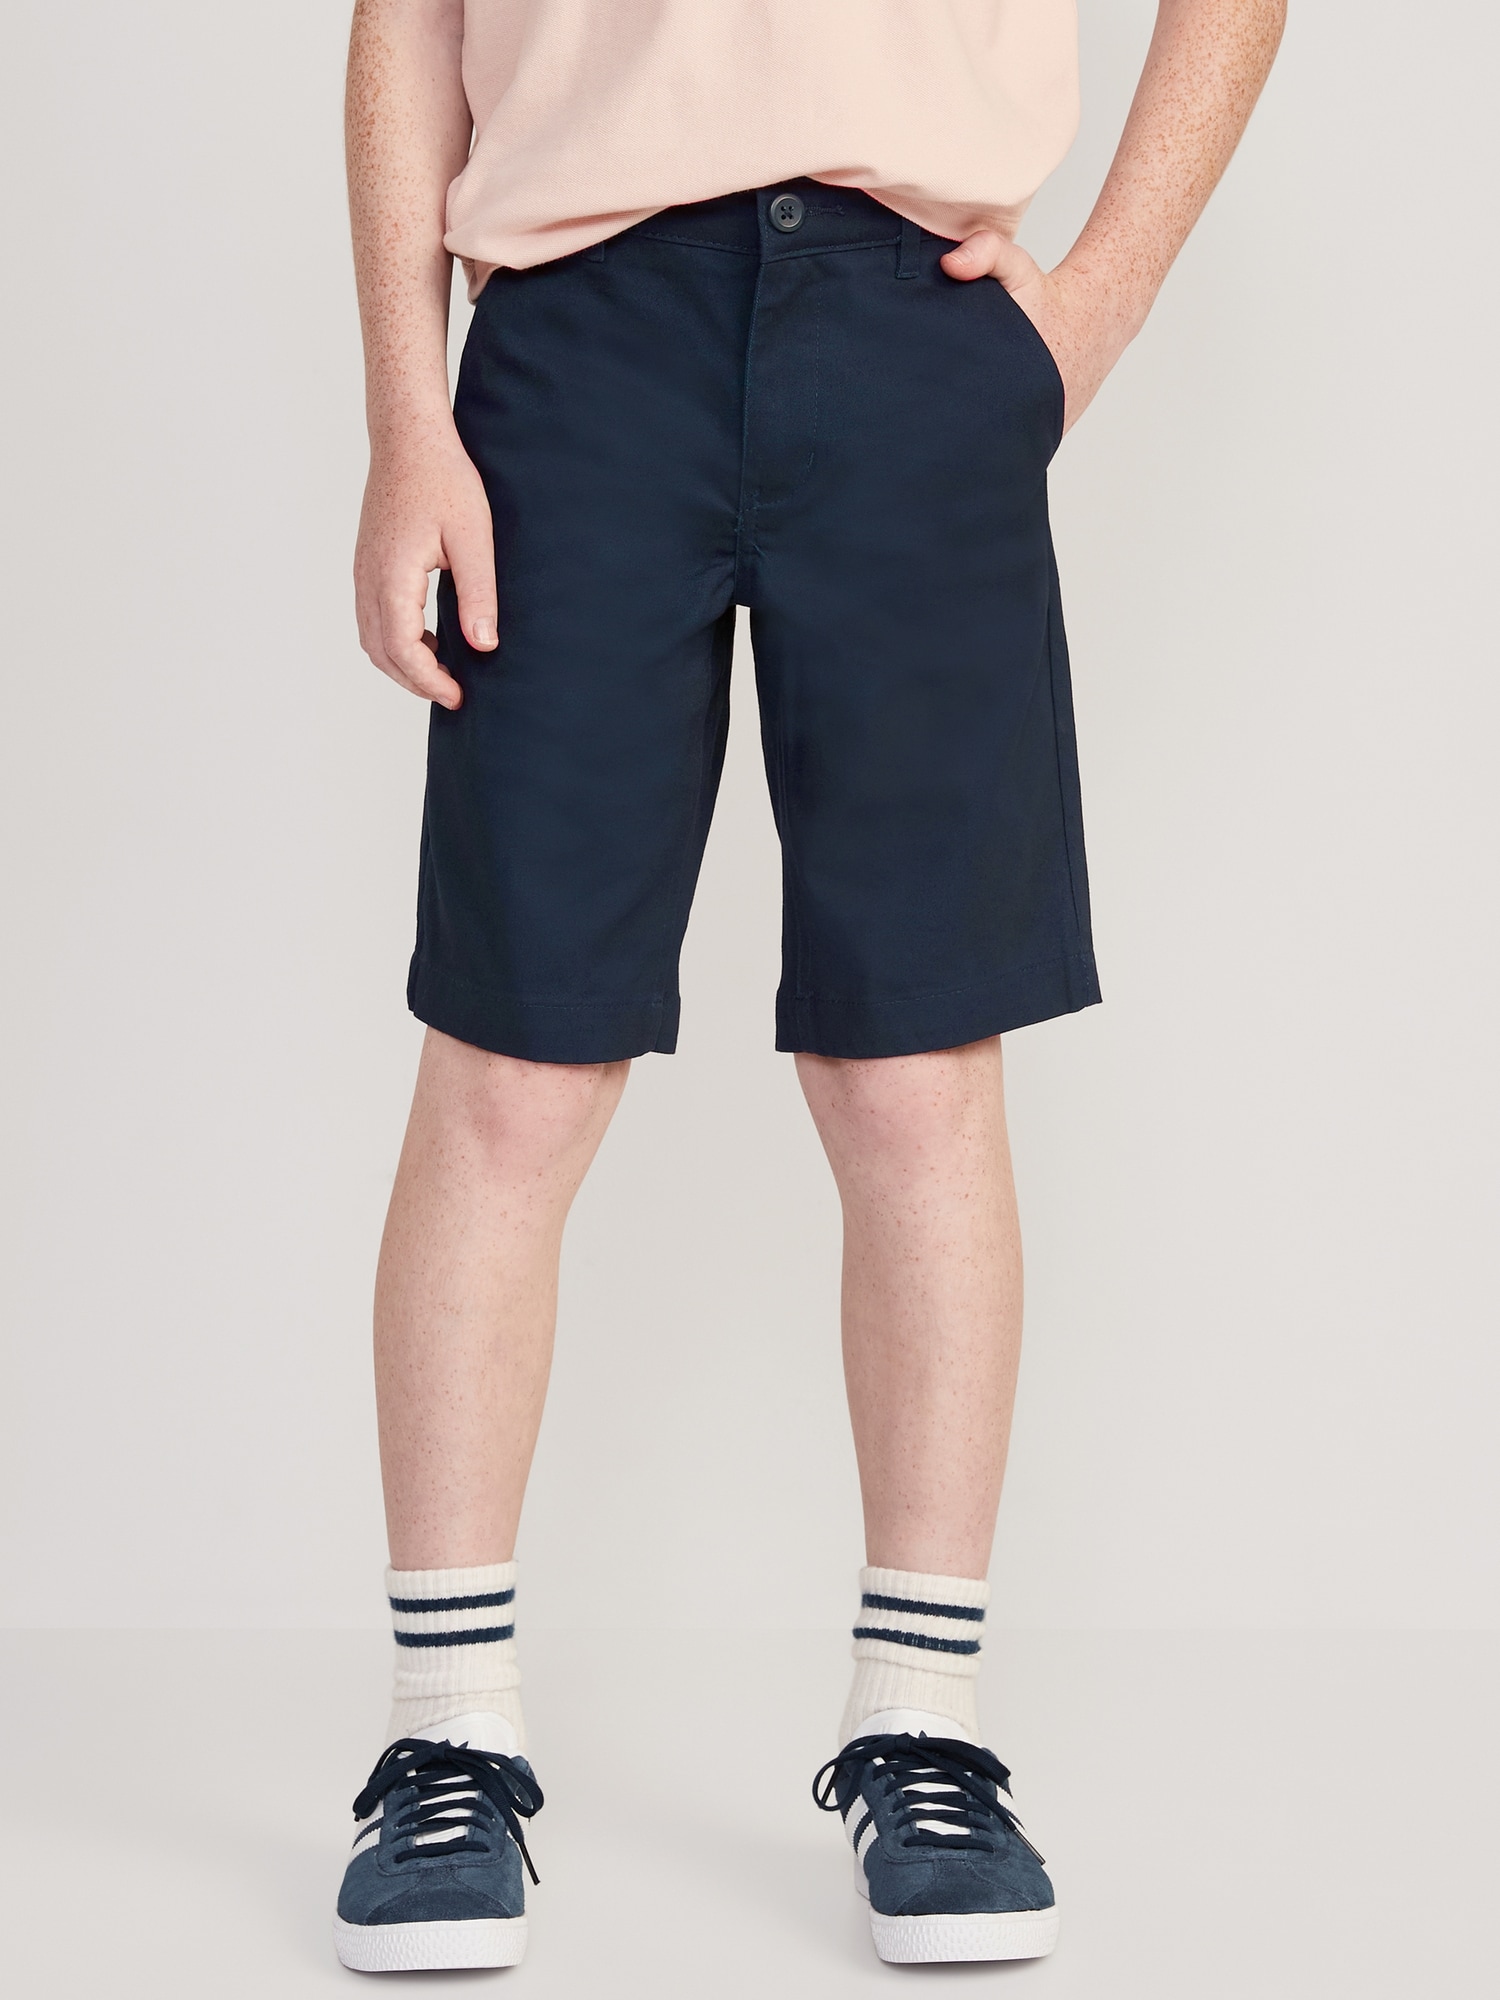 Old Navy Kids' School Uniform Twill Bermuda Shorts - - Plus Size 12